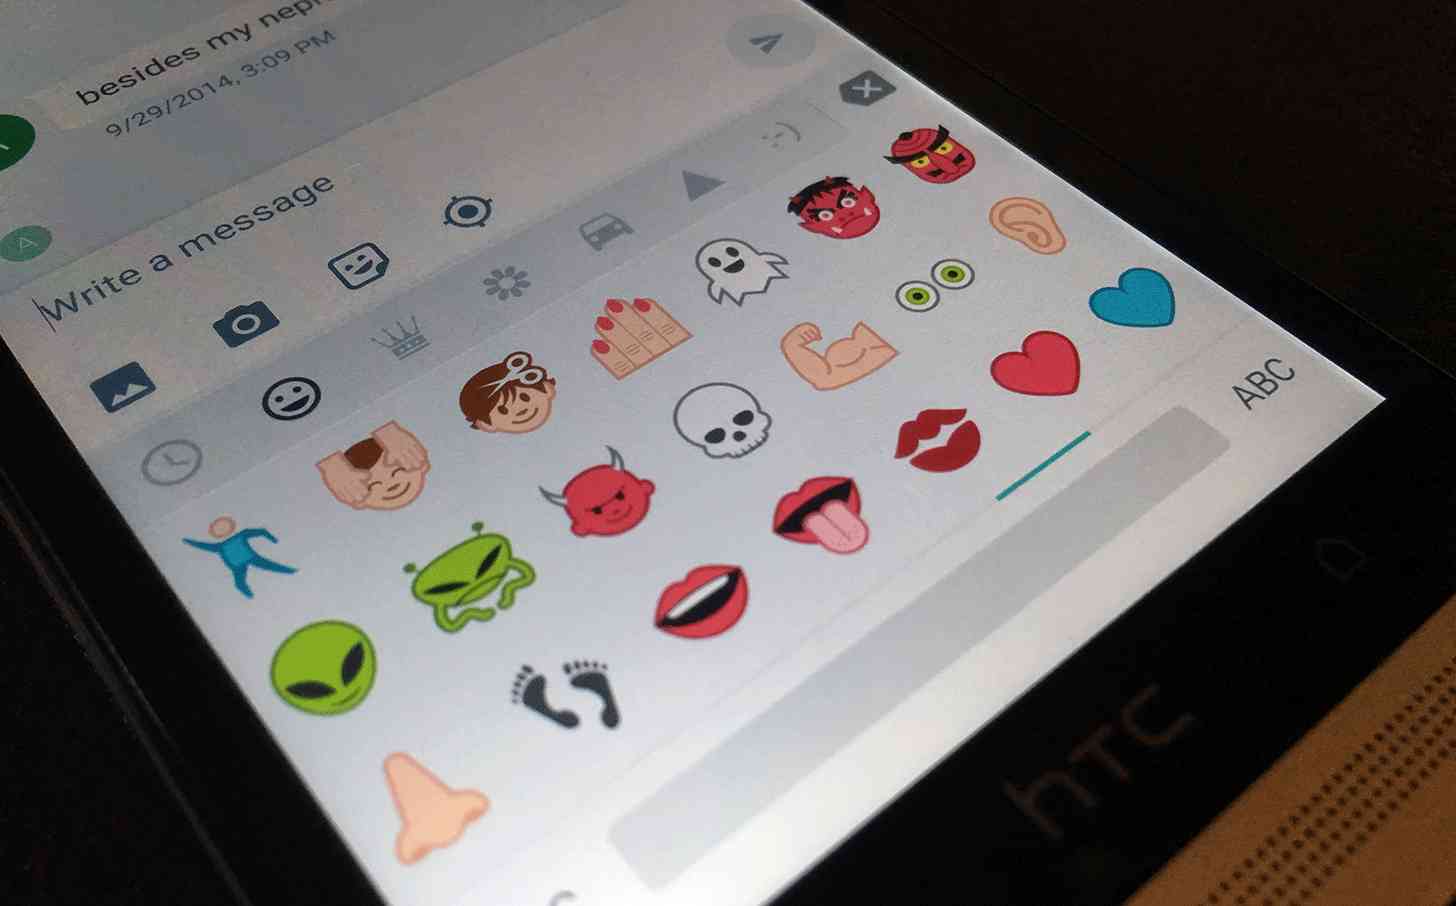 Android emoji characters